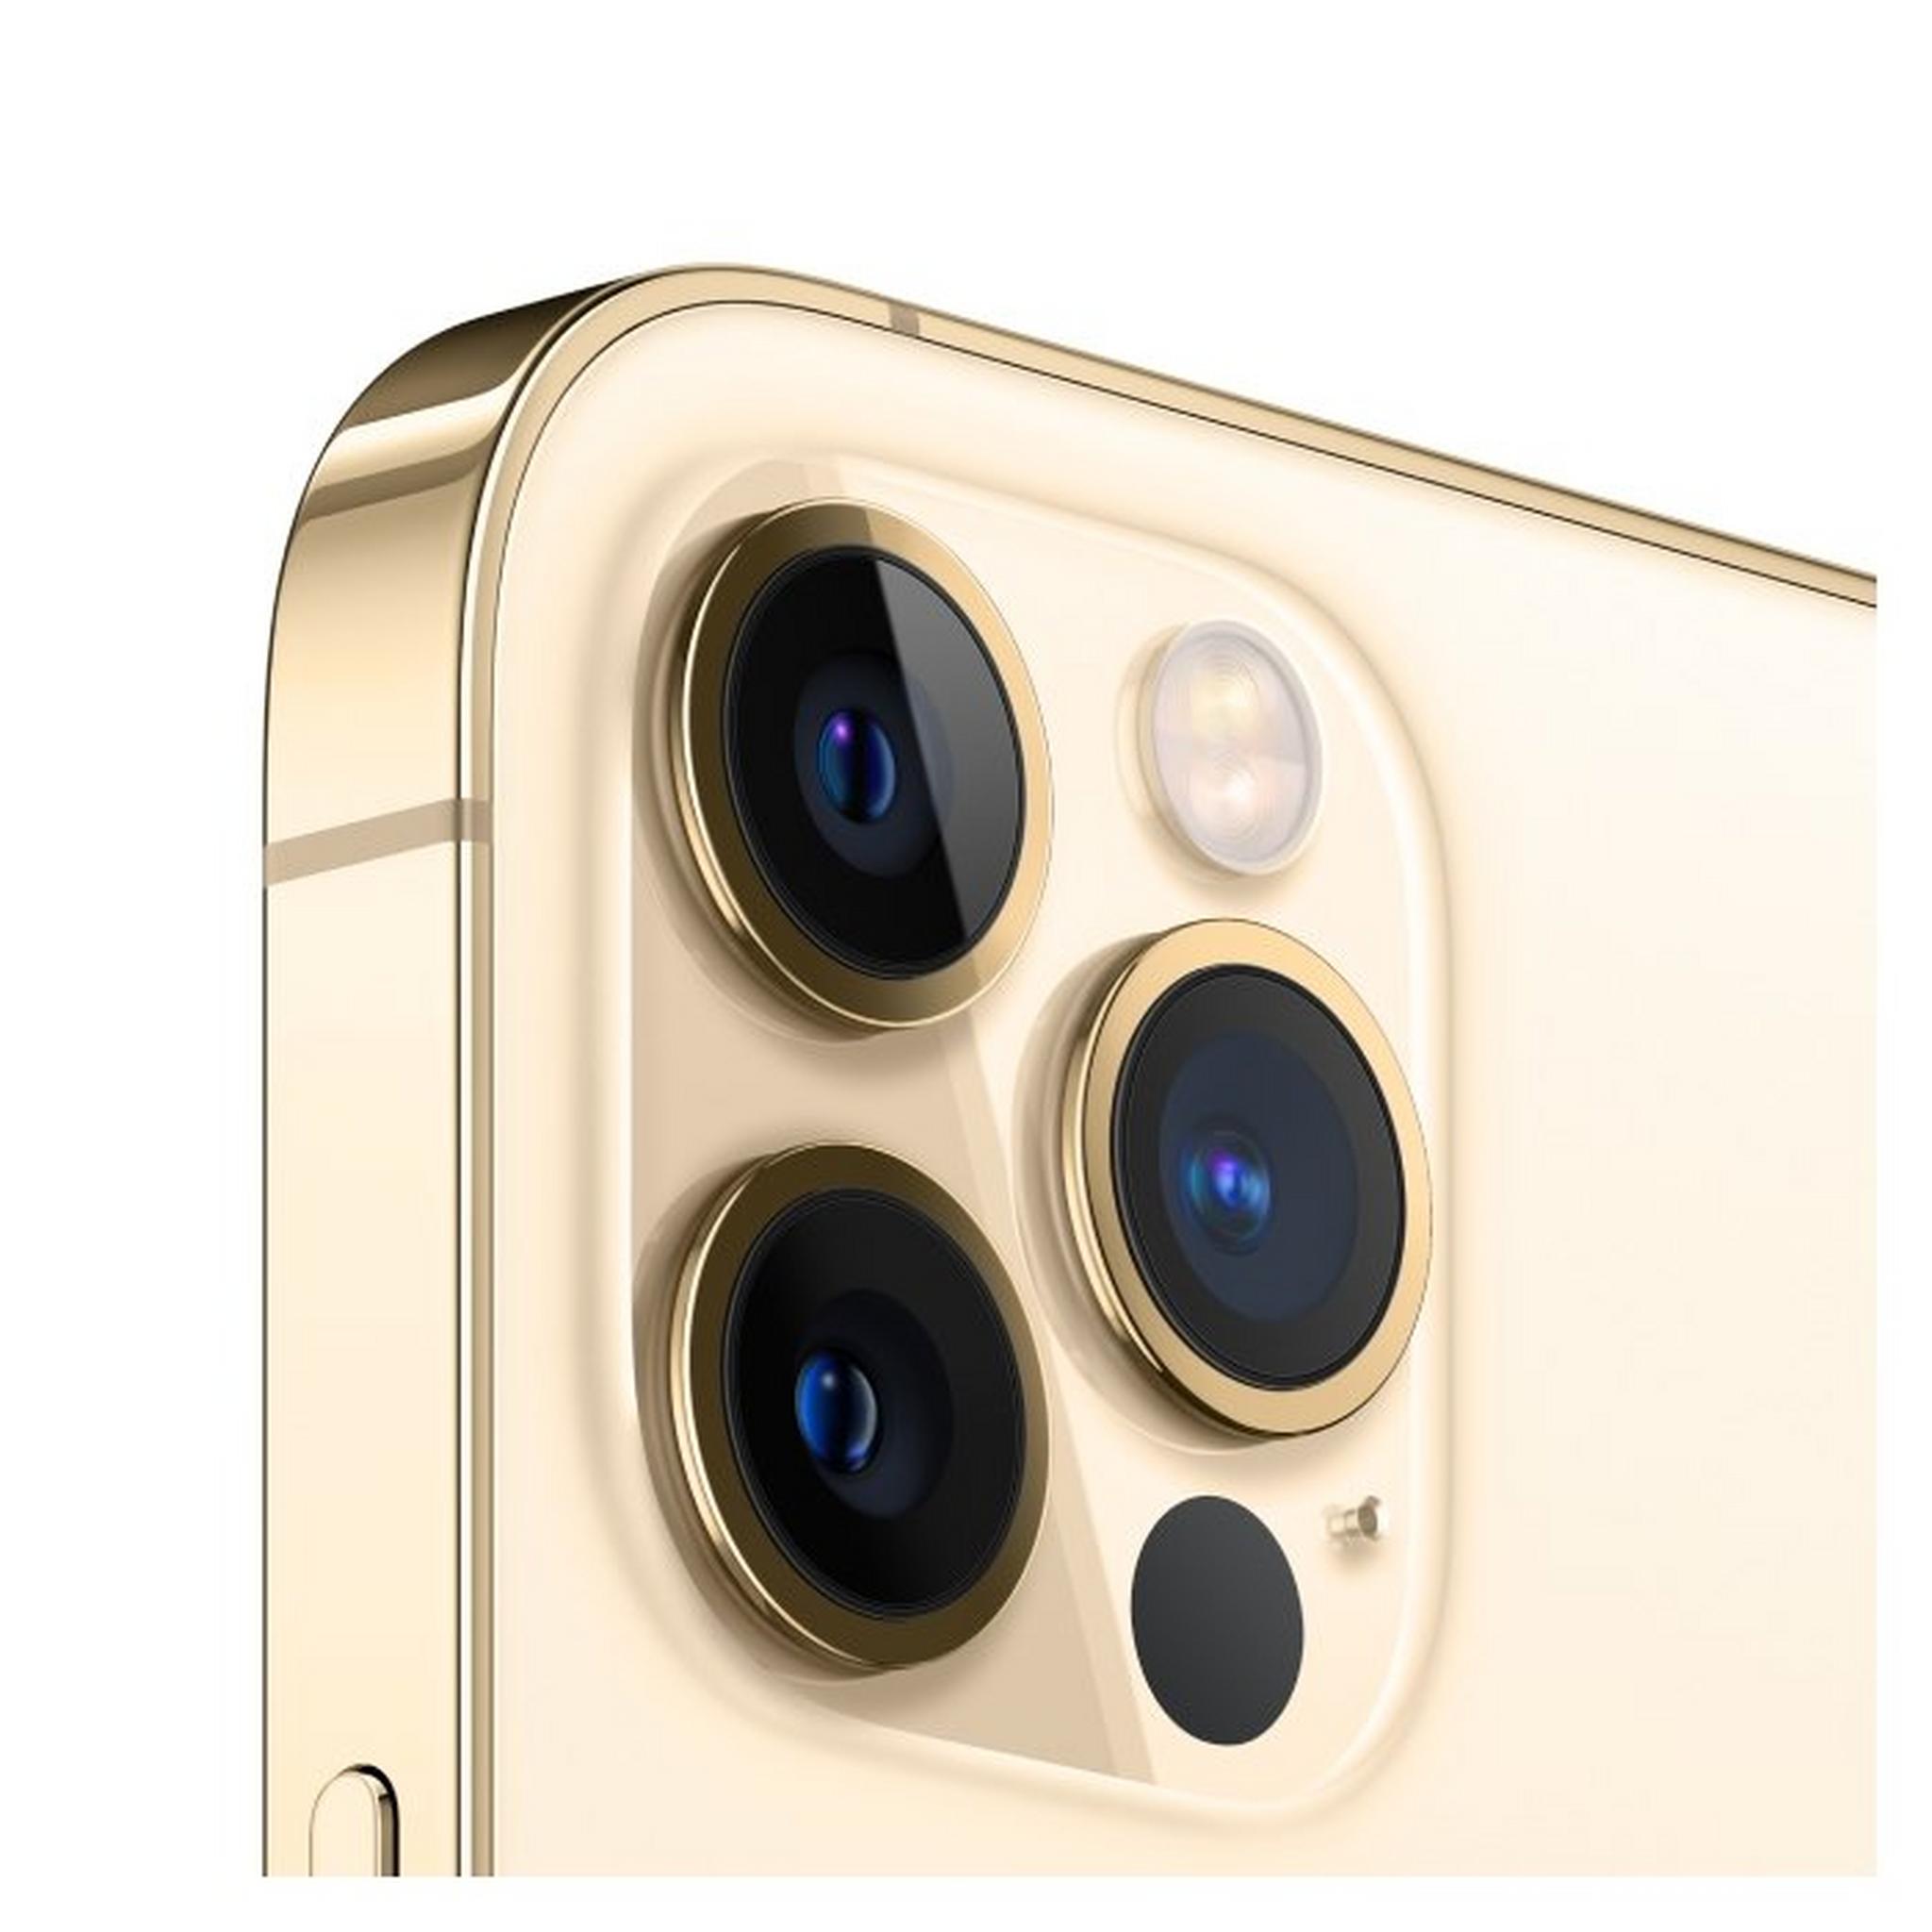 Apple iPhone 12 Pro 256GB - Gold